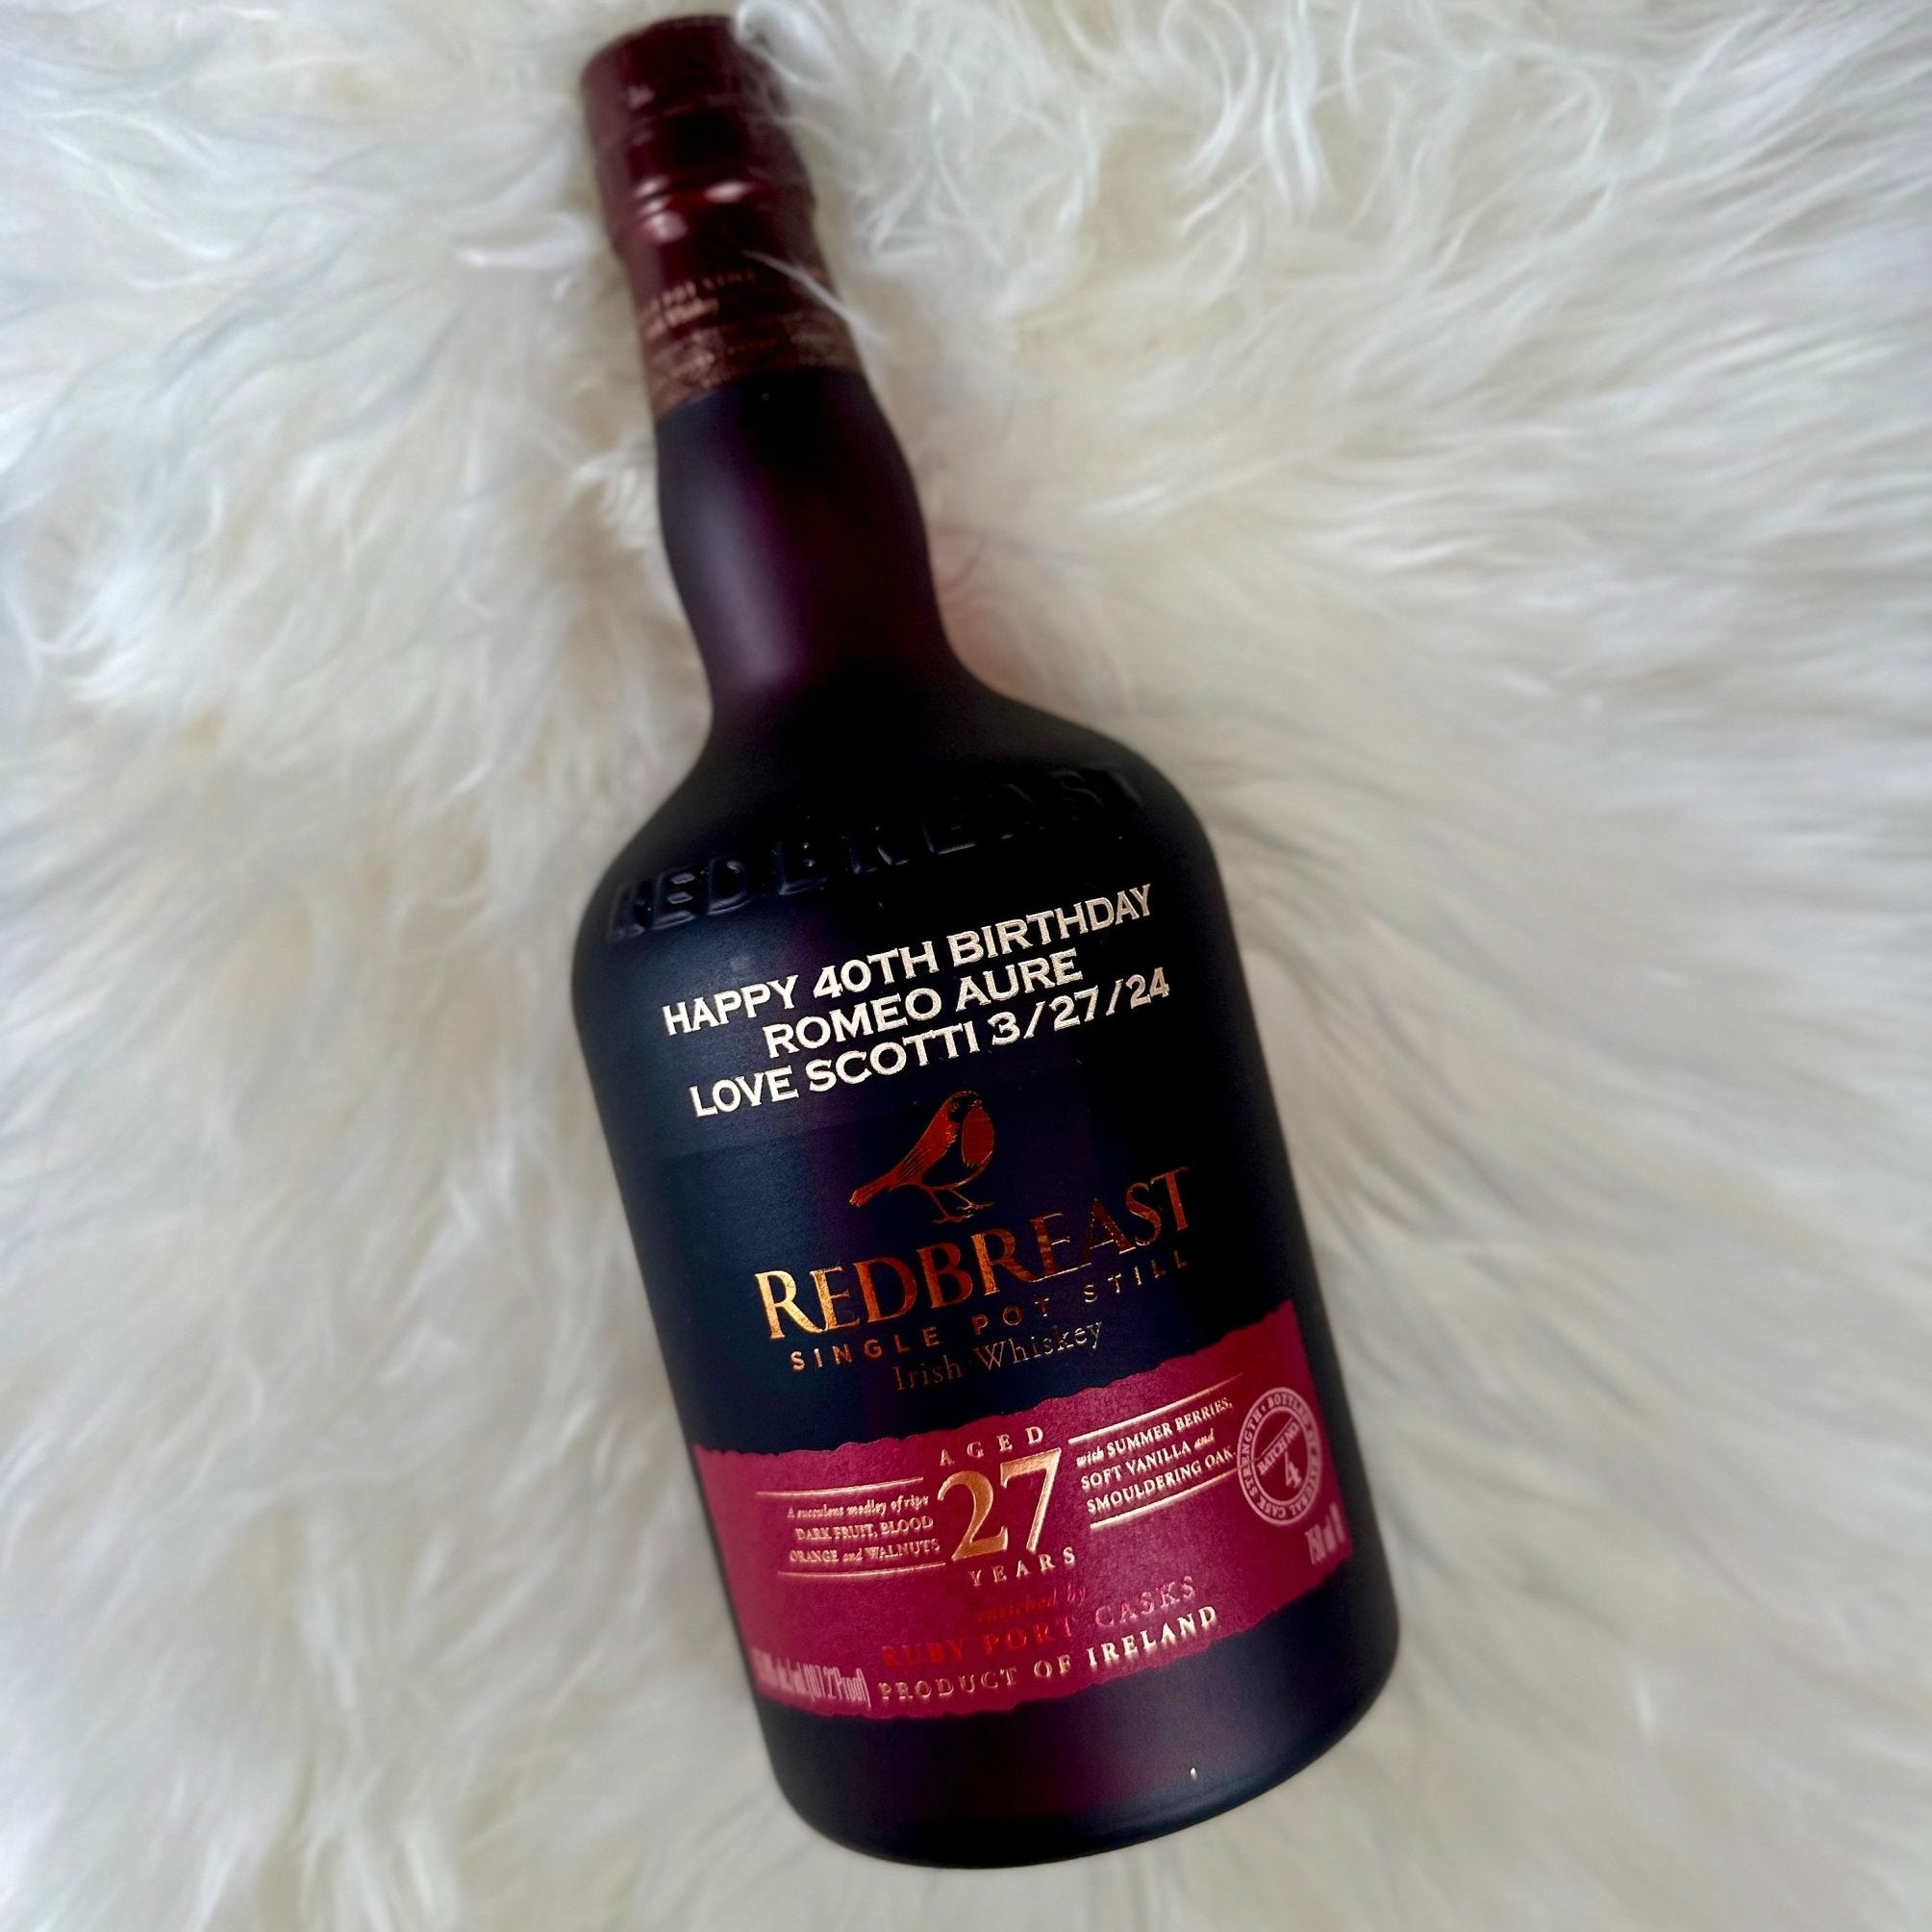 Redbreast PX Edition Irish Whiskey  